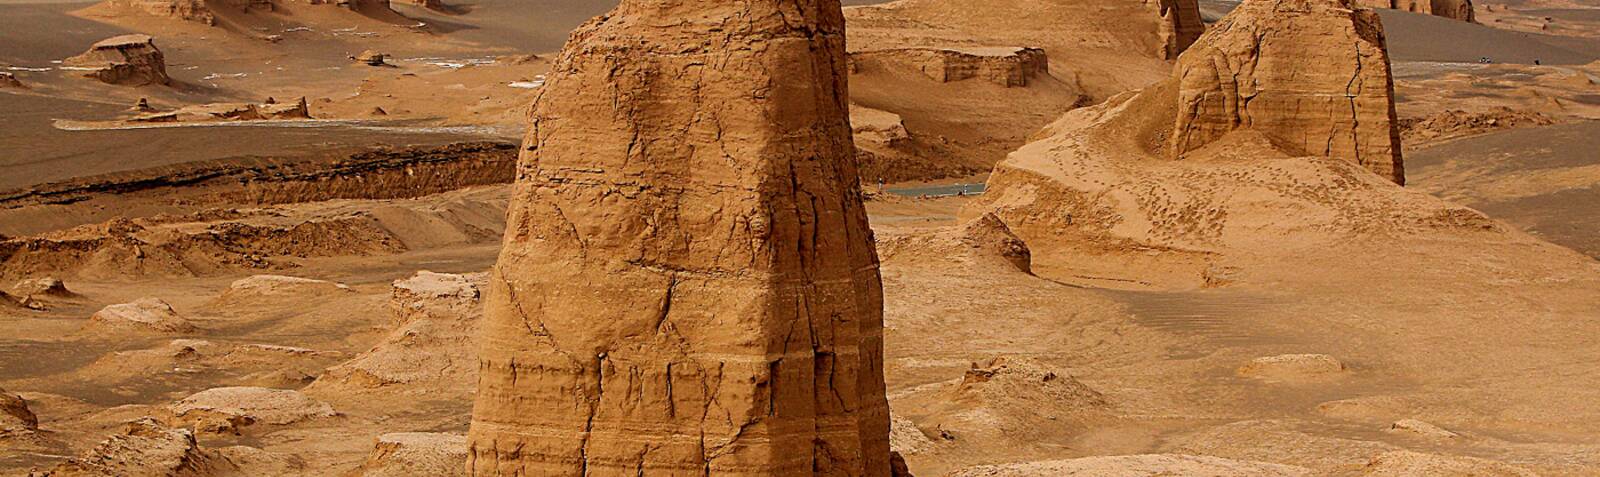 El desierto de Lut, o Dasht-e-Lut